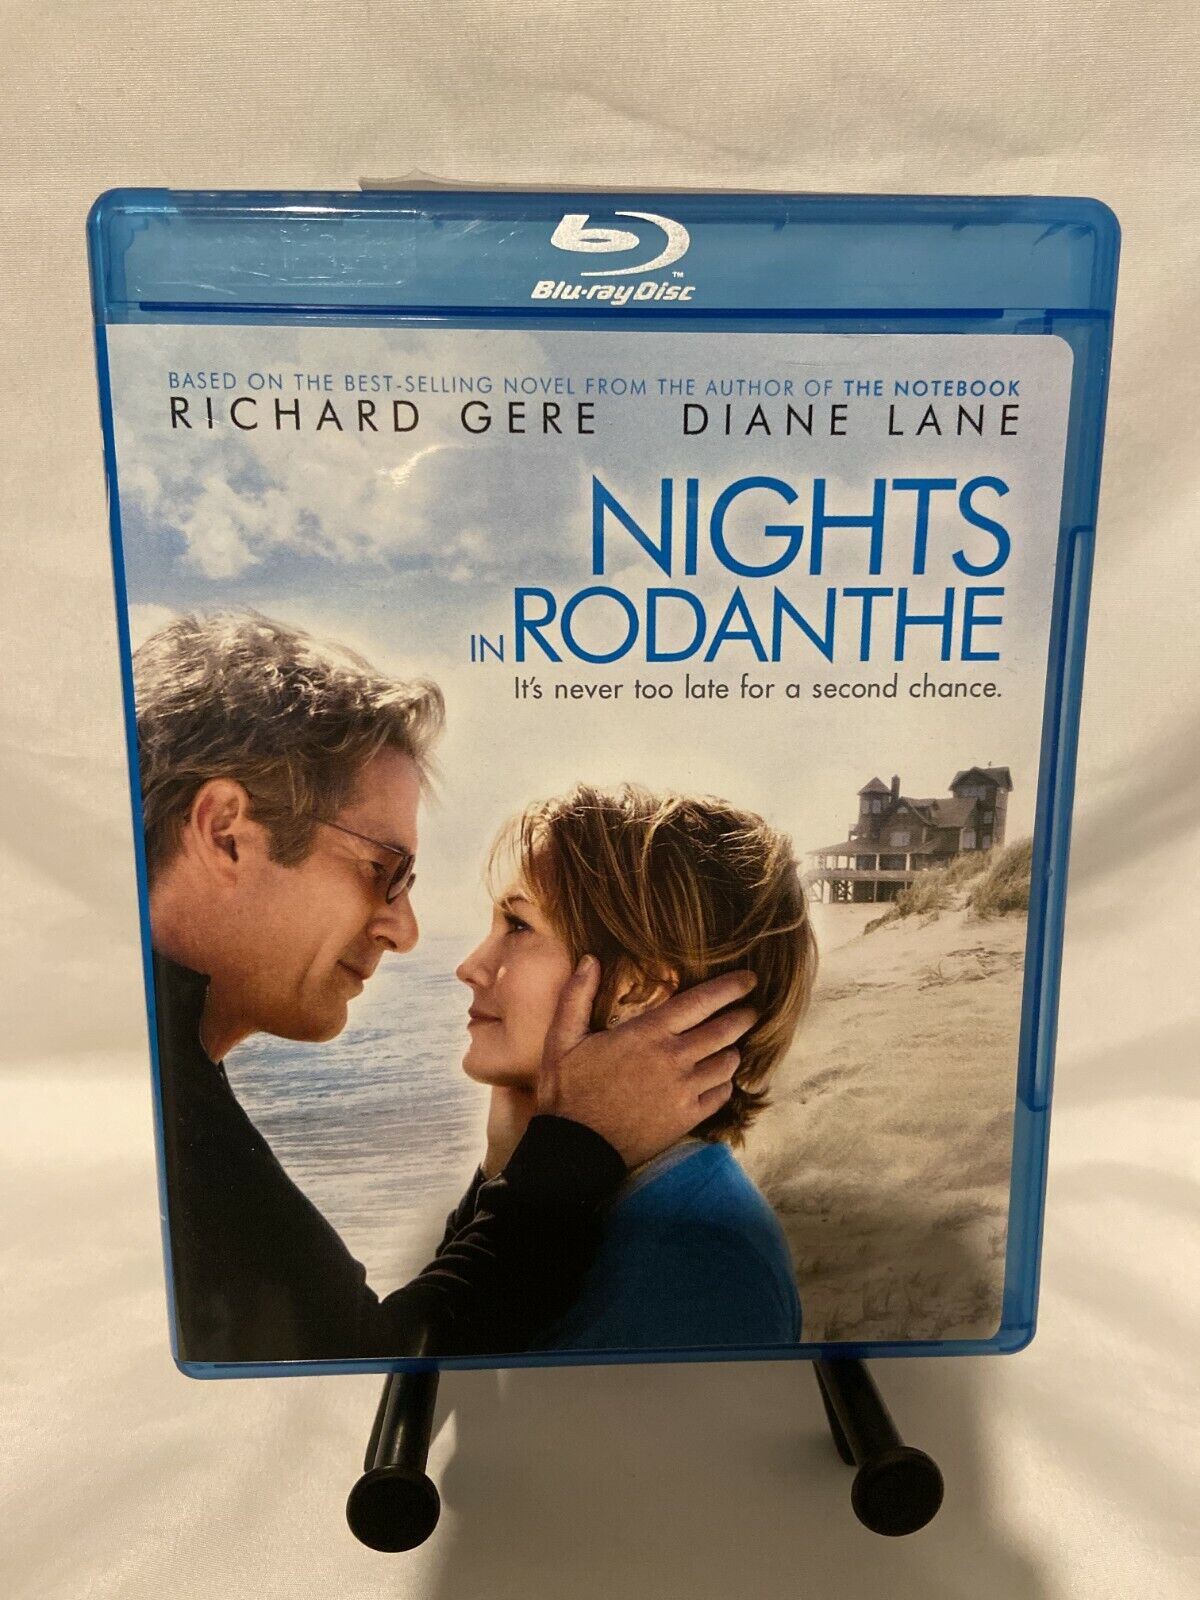 Nights in Rodanthe Blu-ray Meryl Streep, Redford, Robert, Kitchen, Michael,  Thia 85391189923 | eBay